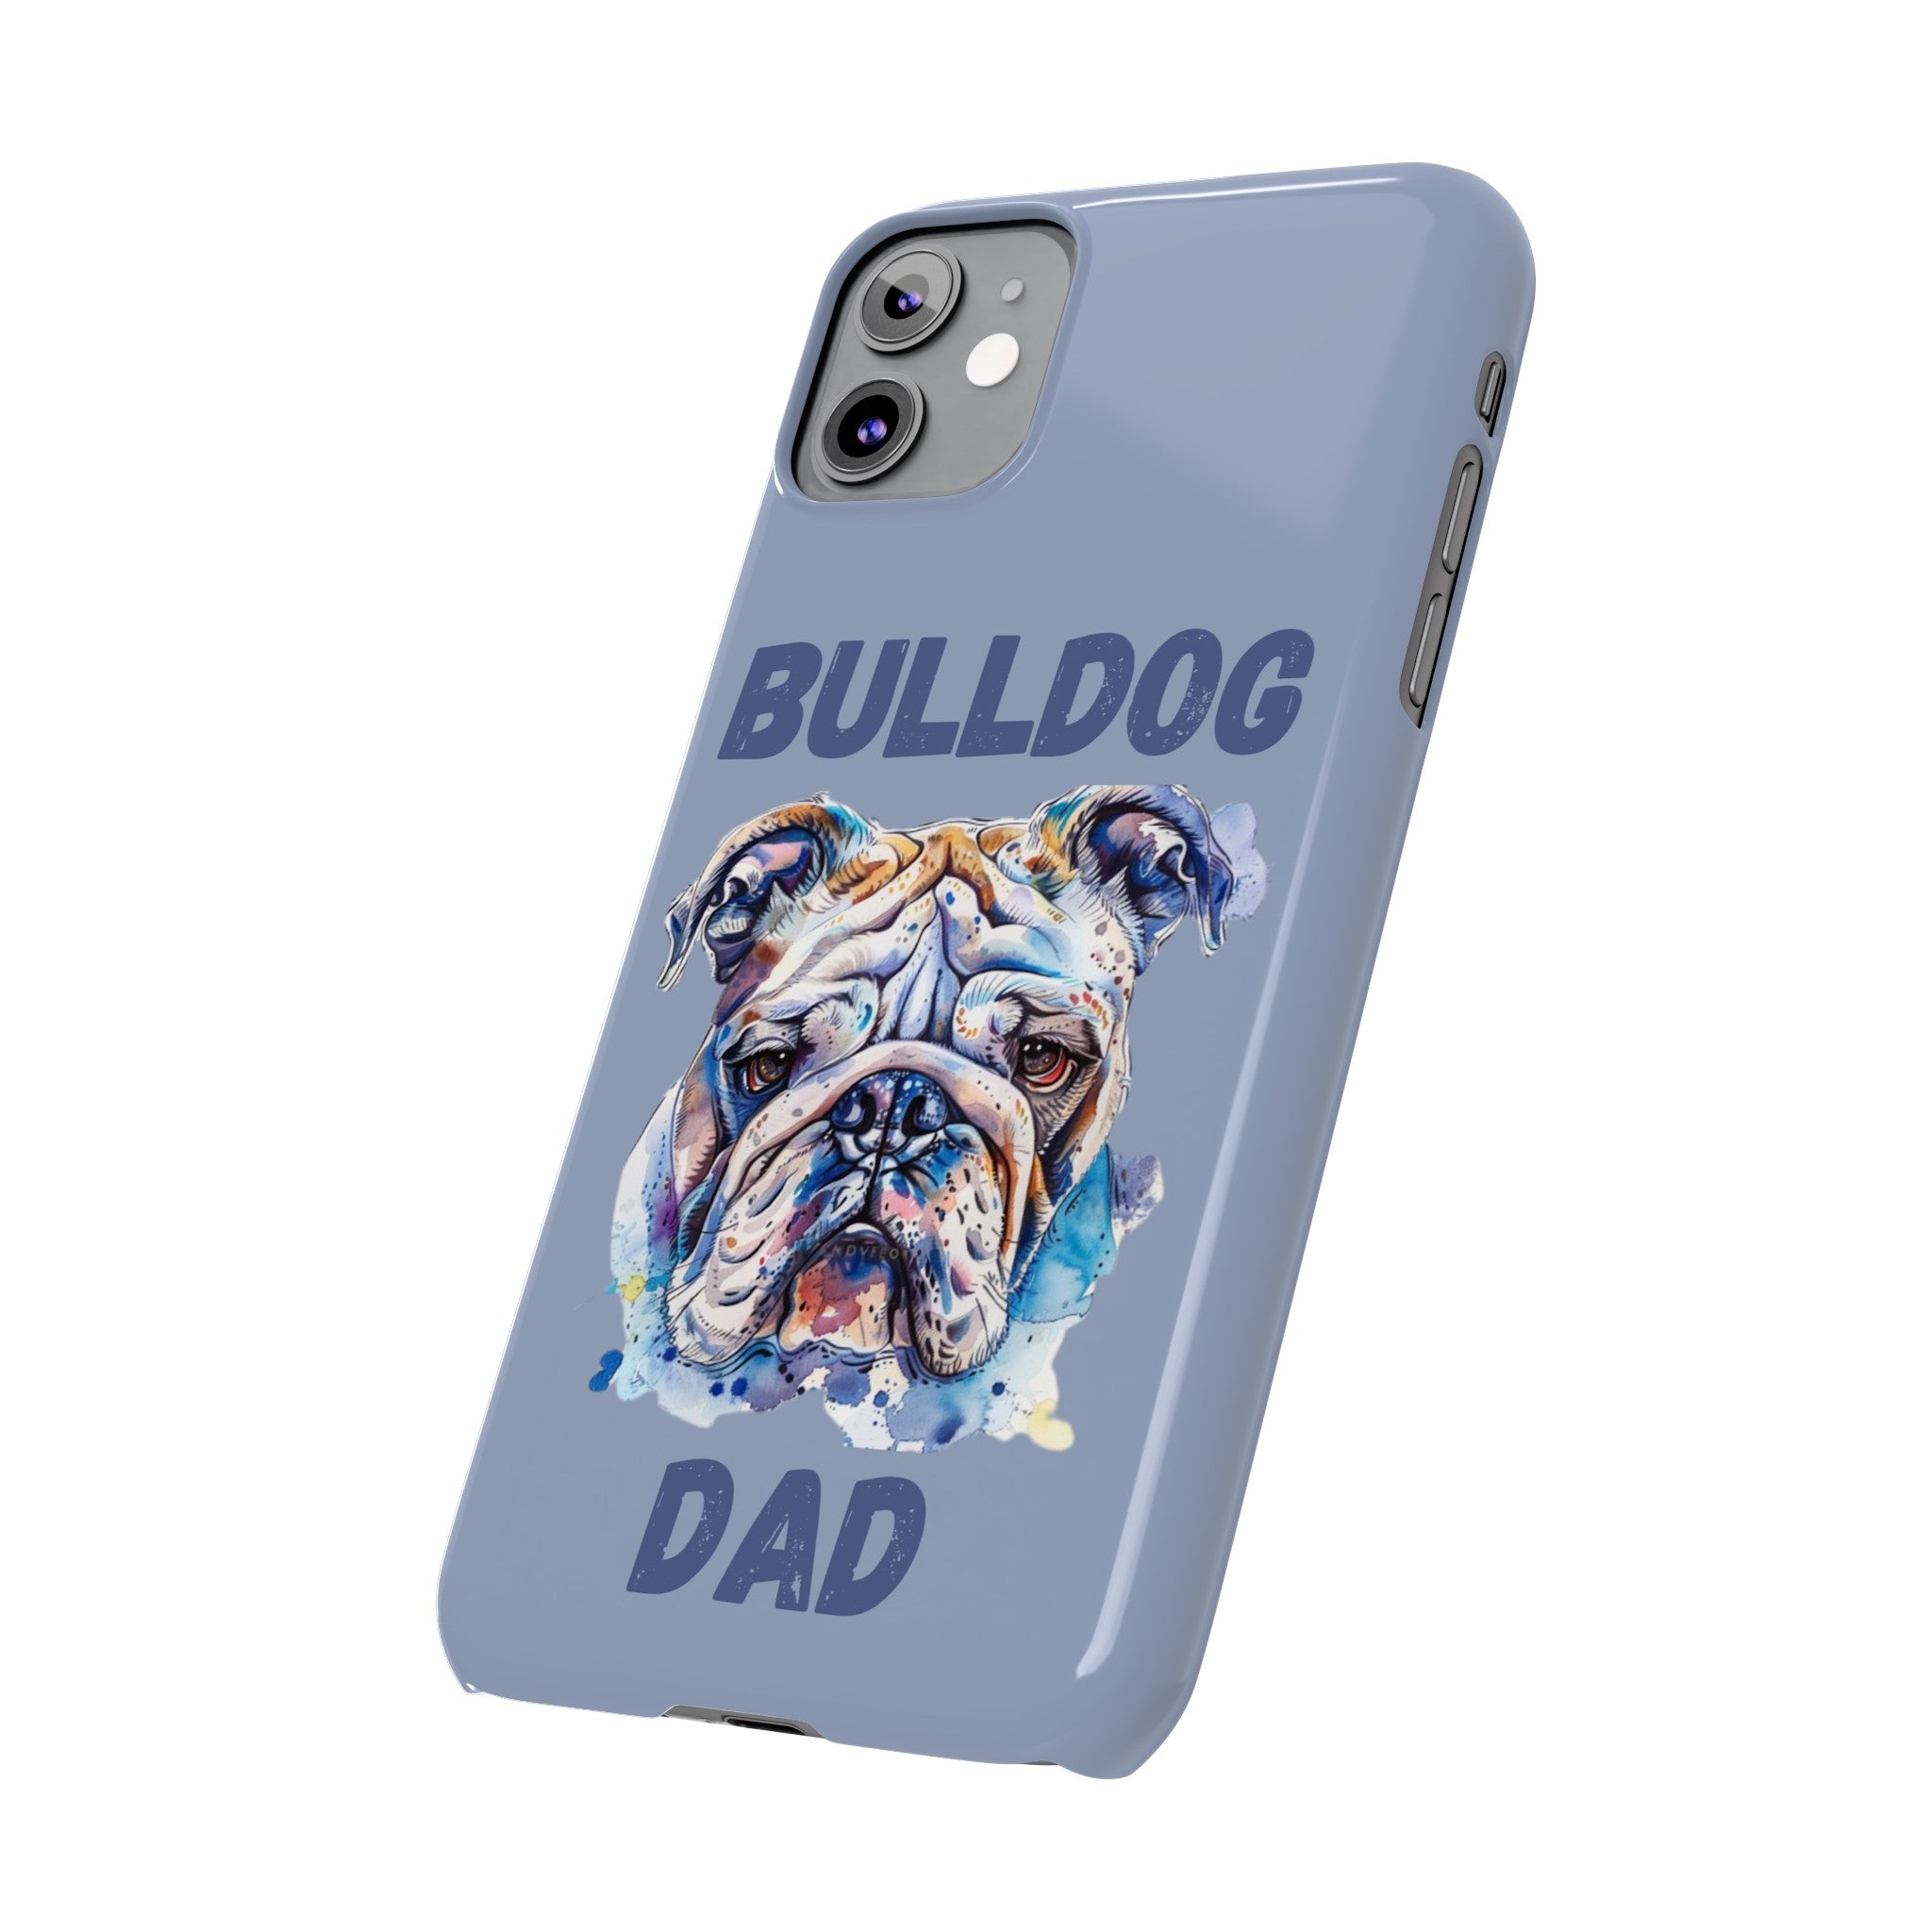 Bulldog Dad iPhone Cases (English/Watercolor)